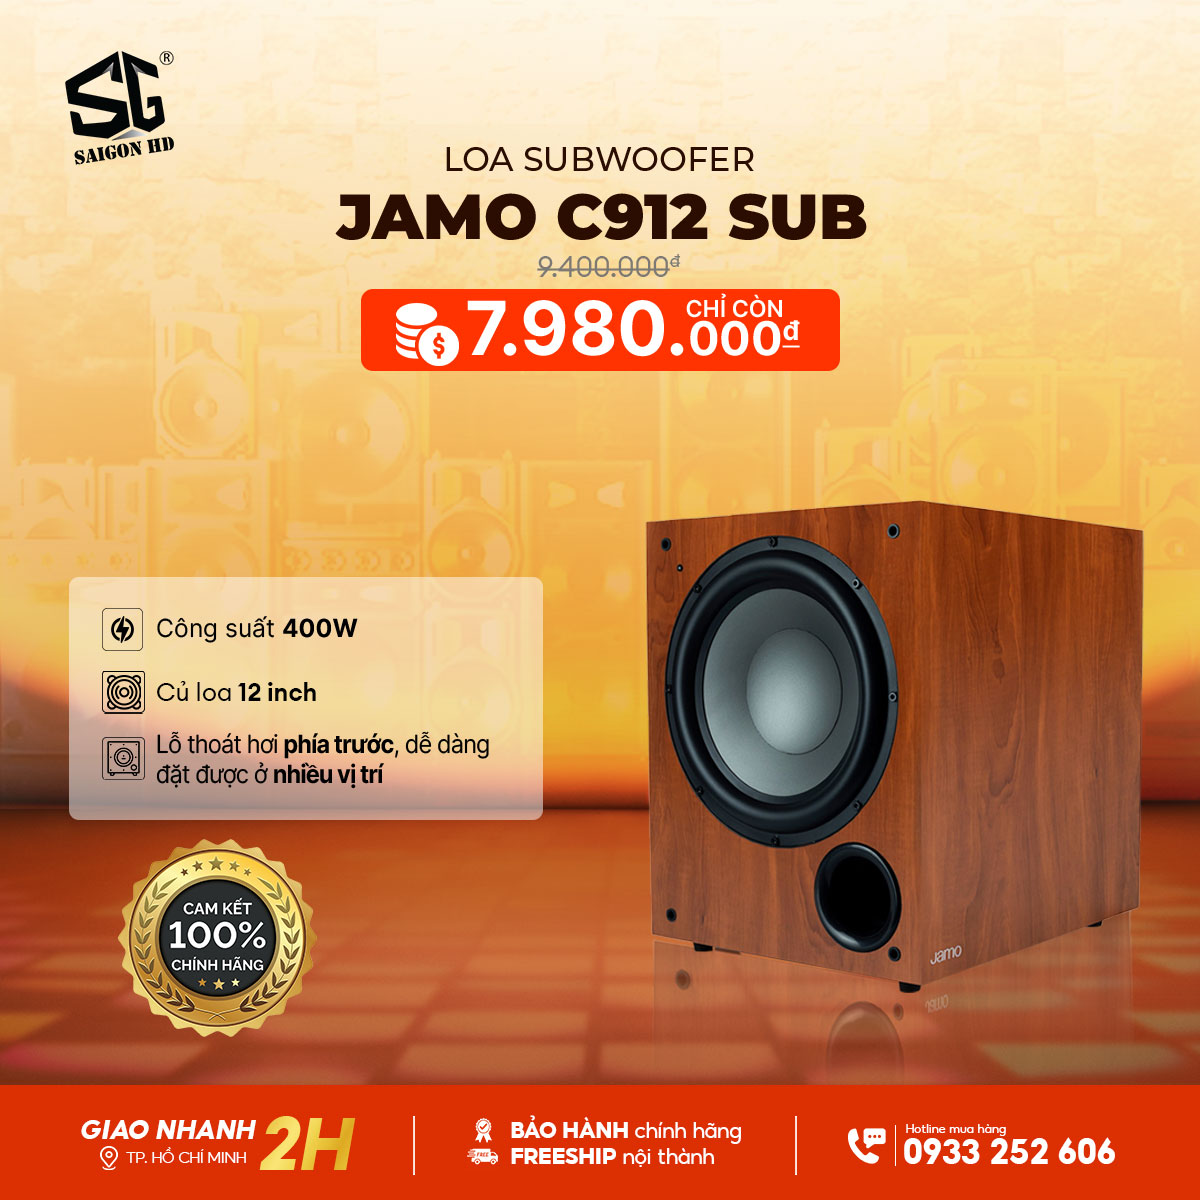 Loa Subwoofer Jamo C912 Sub